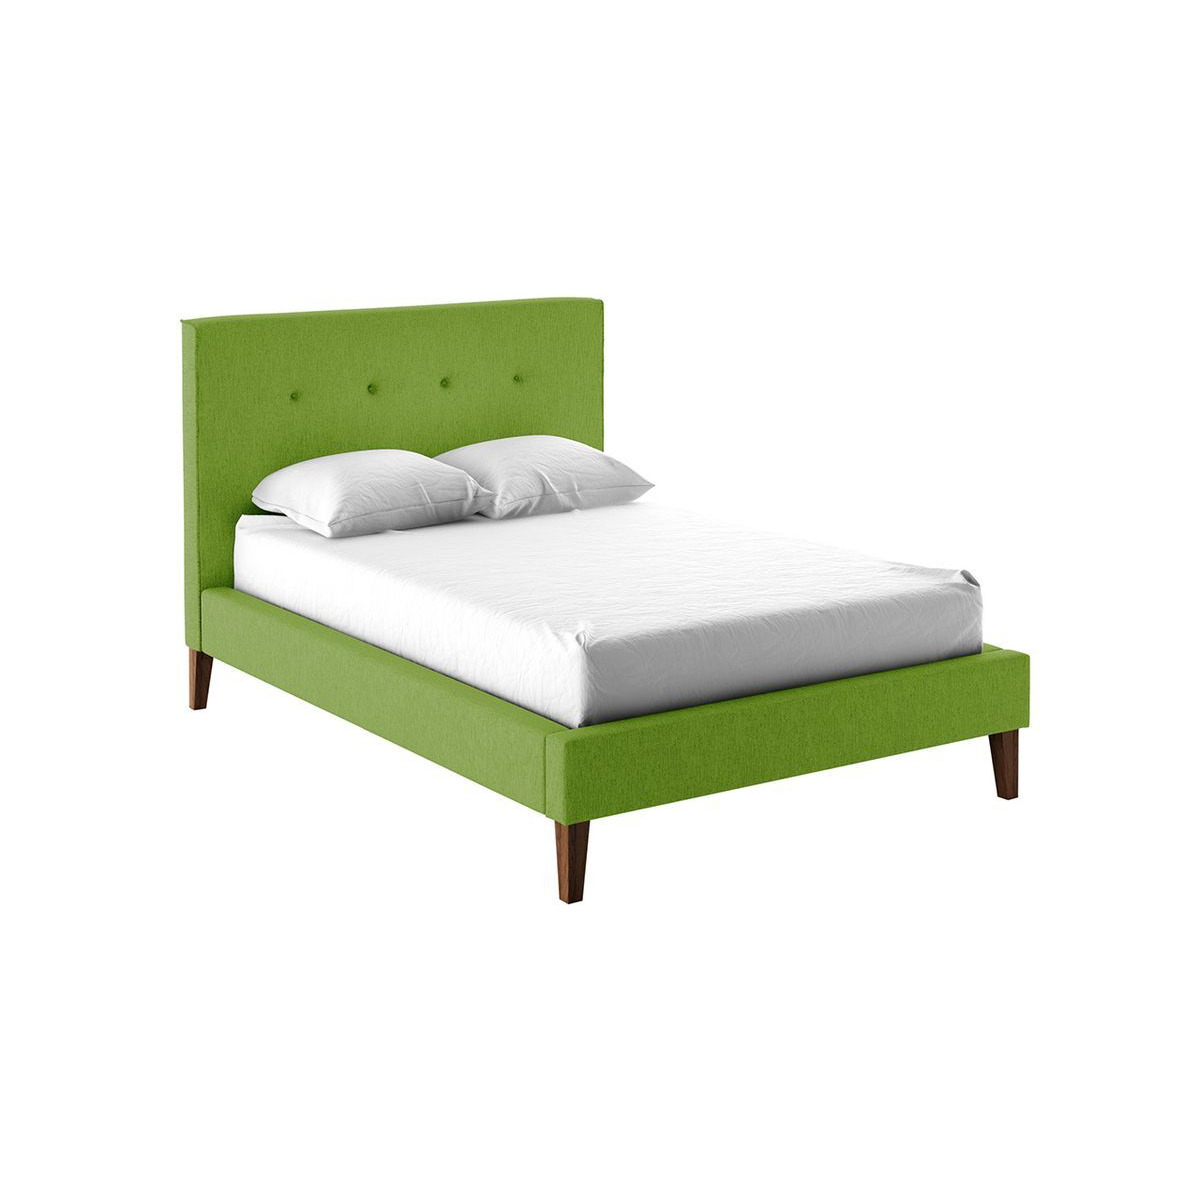 Inspire Upholstered Bed Frame, lime - image 1